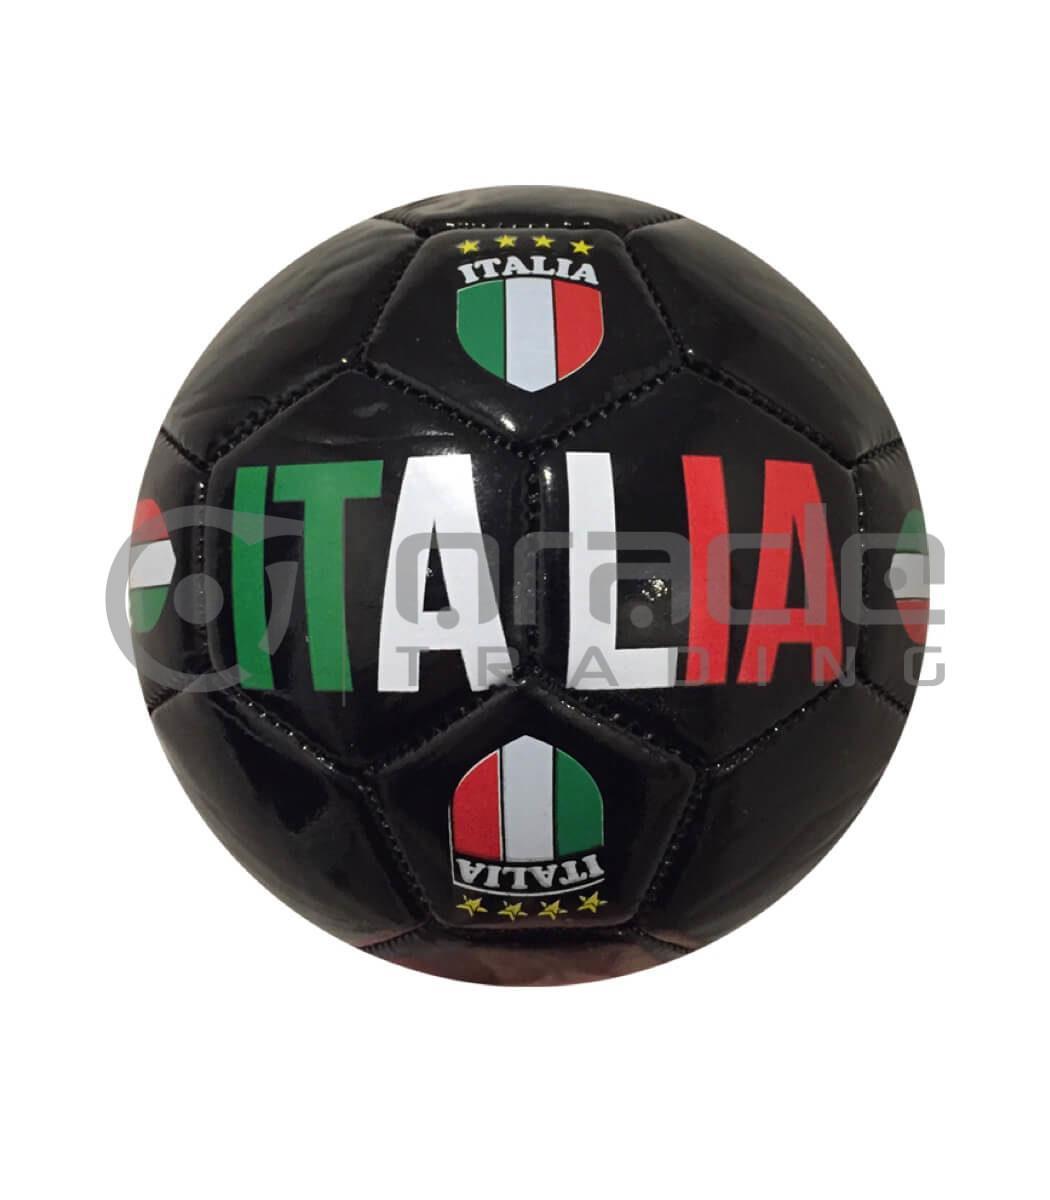 Italia Small Soccer Ball - Black